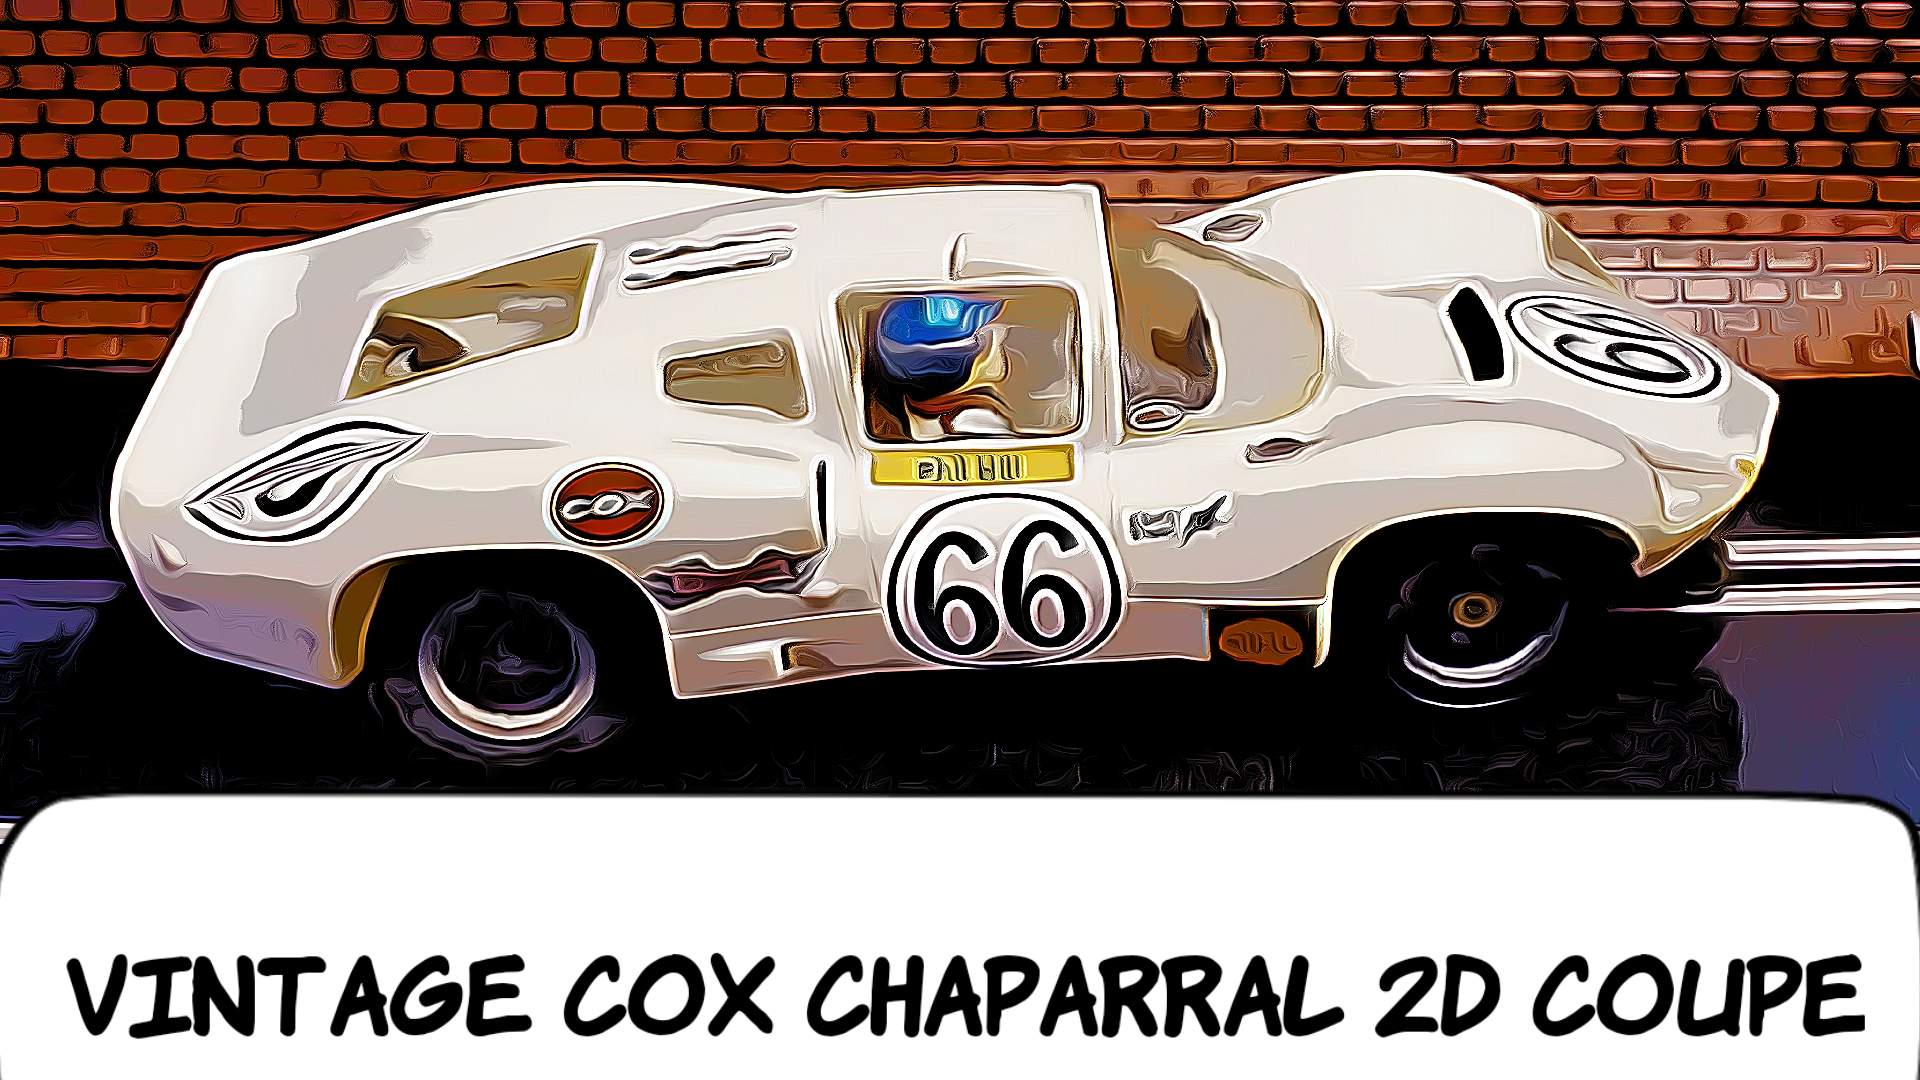 * SOLD * * SALE, Save $50 off our Ebay Price * Vintage COX Chaparral 2D Coupe Prototype Slot Car #66 1:24 Scale